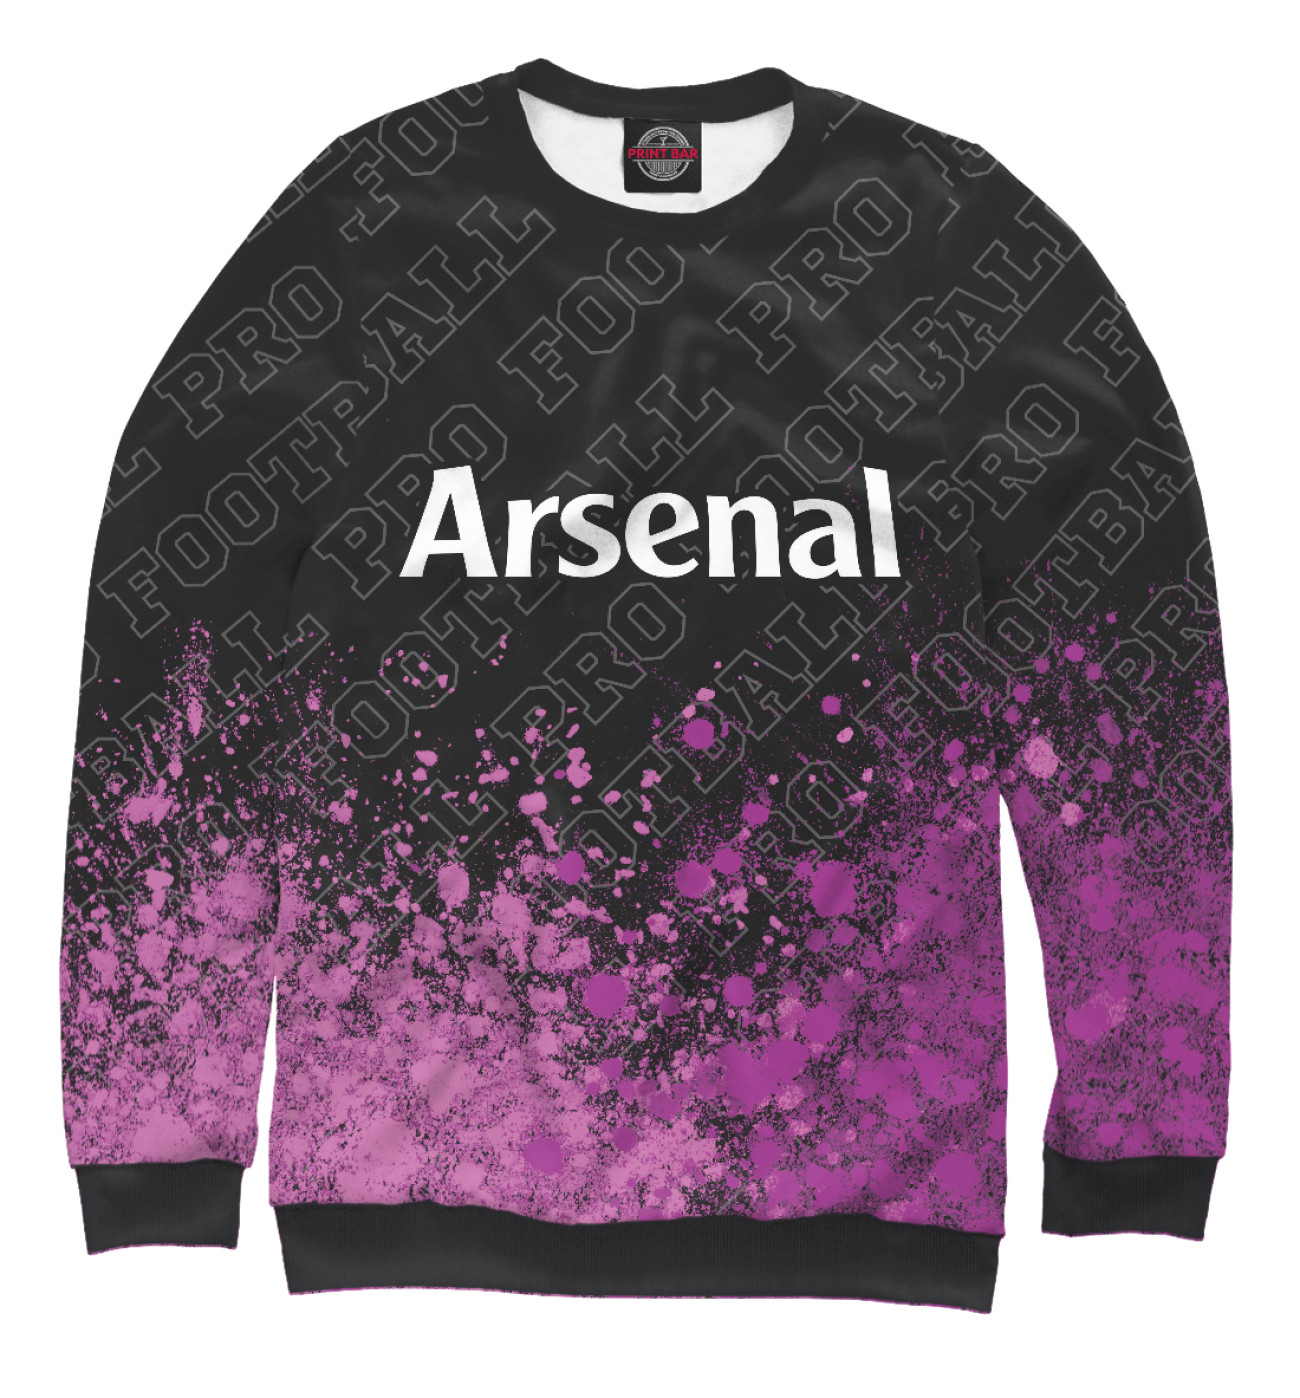 Мужской Свитшот Arsenal Pro Football (color splash), артикул: ARS-755668-swi-2